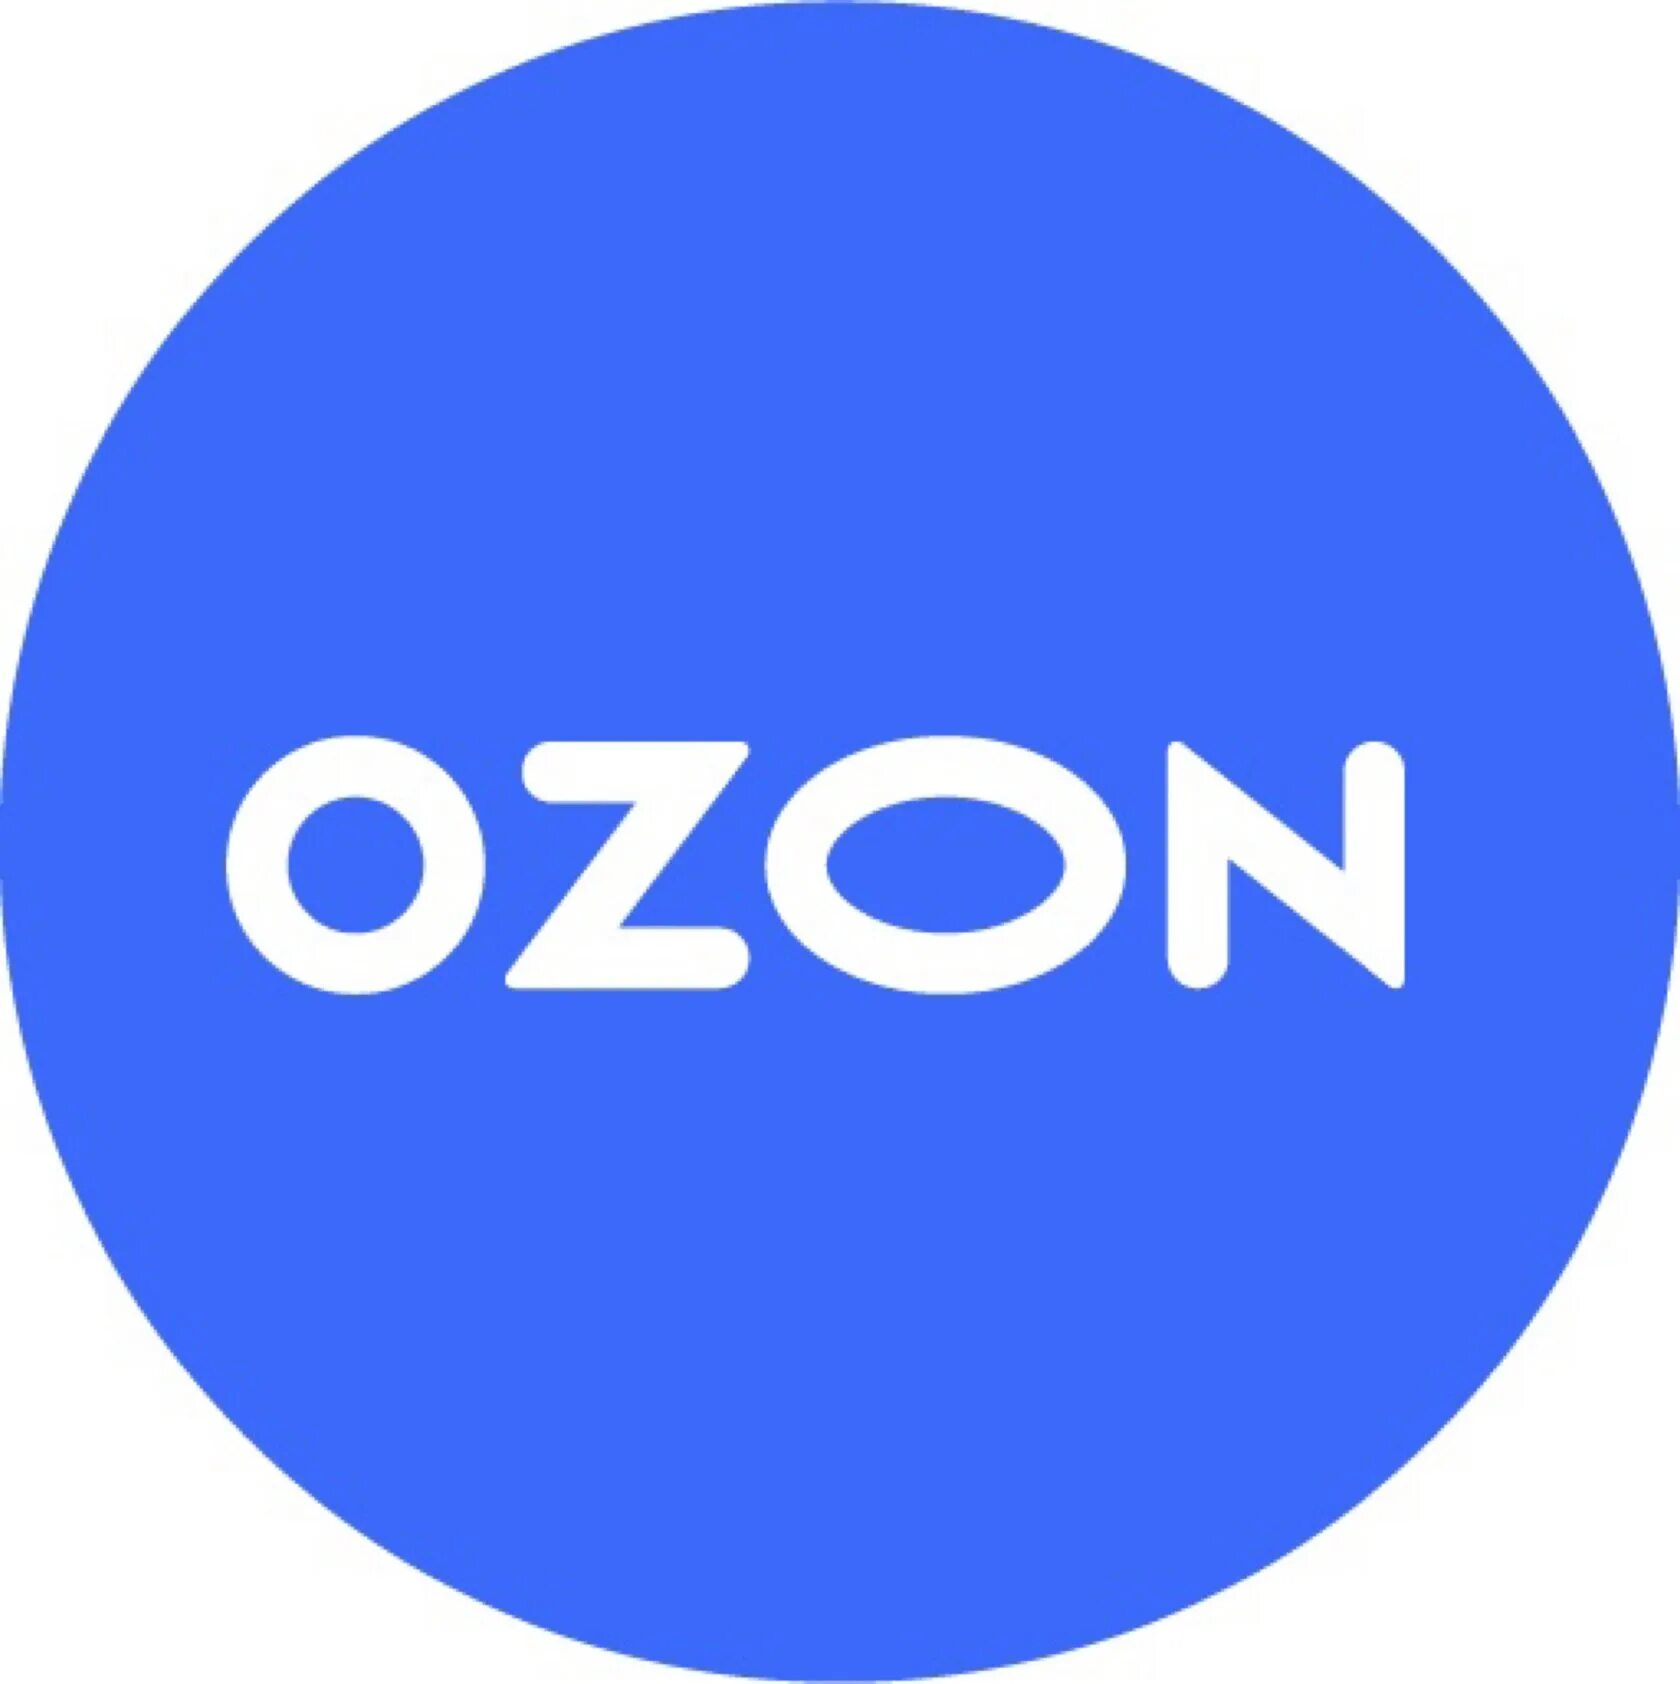 Озон сортавала. Озон. Озон логотип. Логотип Озон круглый. Осан.